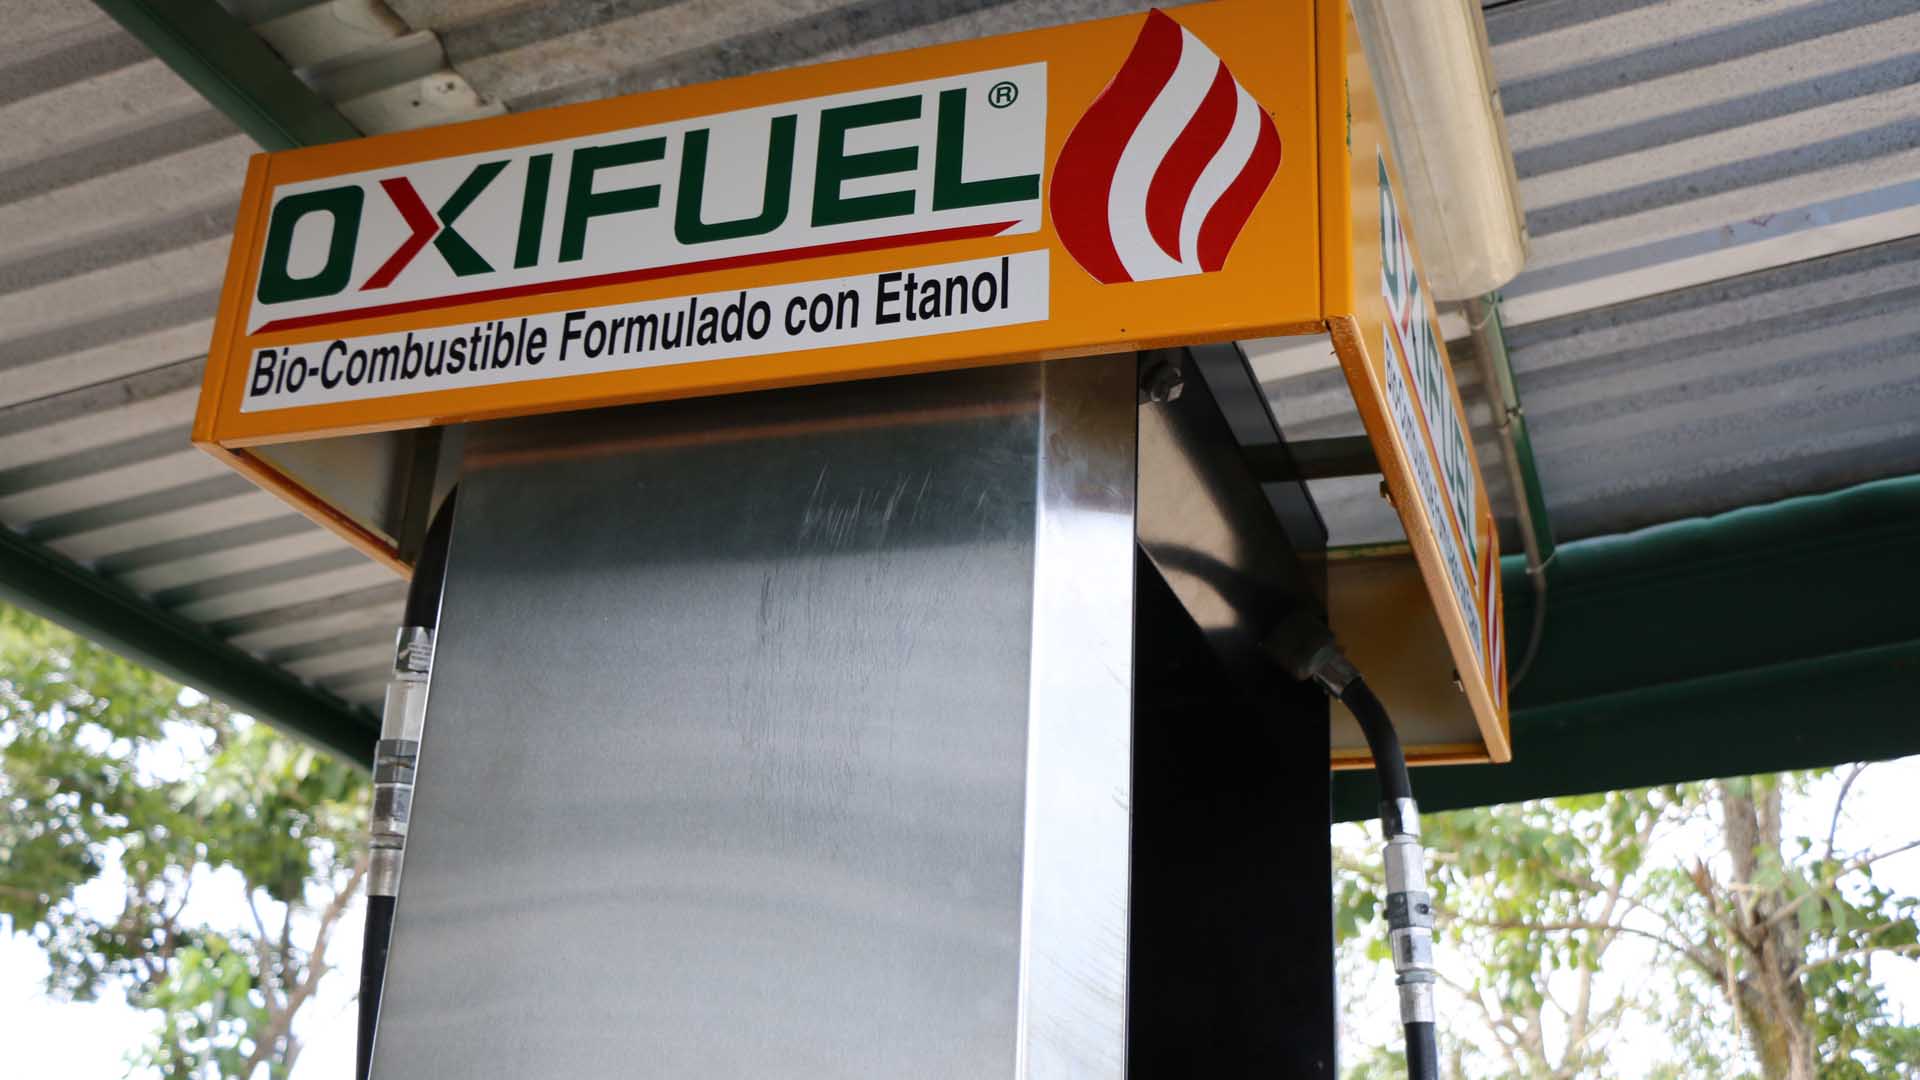  Ofrecen alternativa al alza de la gasolina; venden etanol a $13 el litro